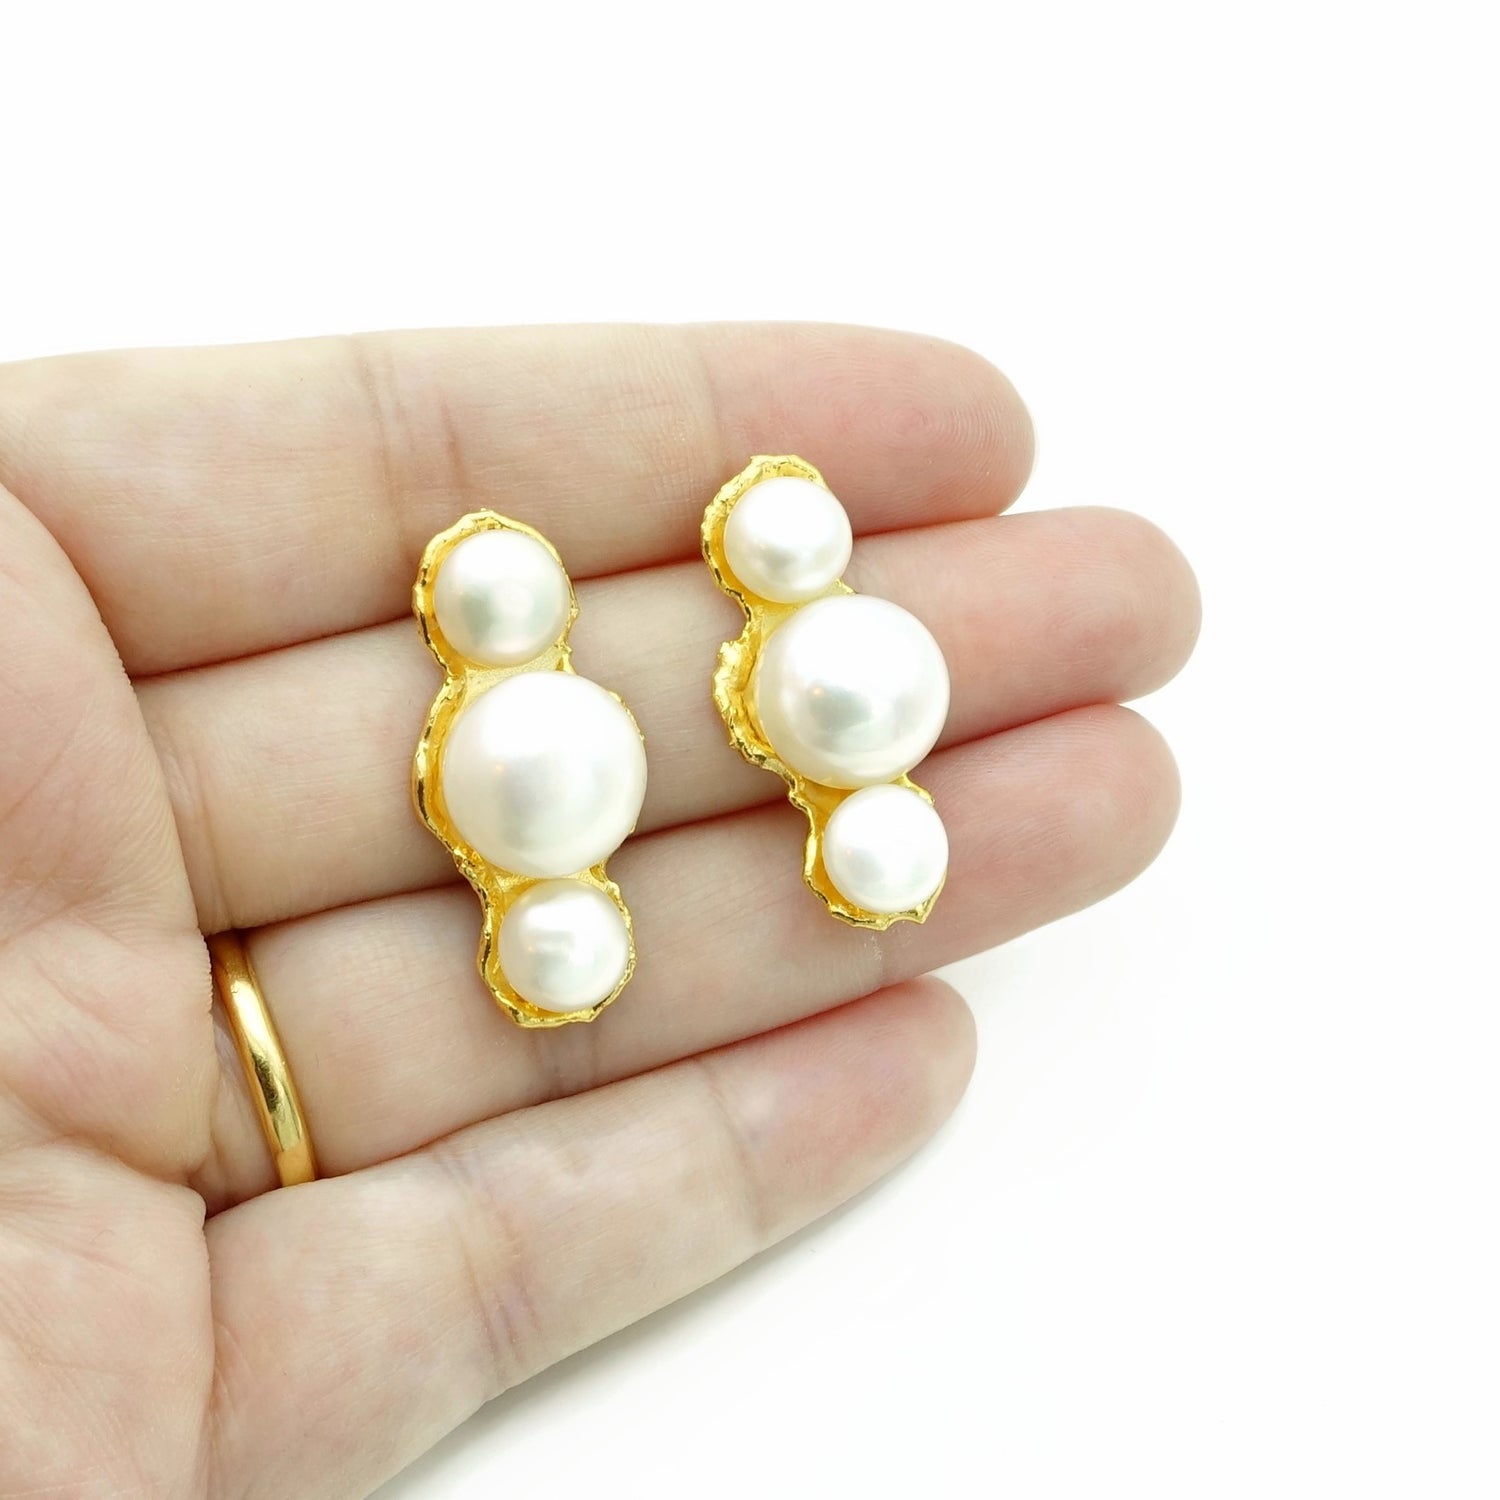 Aylas Pearl earrings - 21ct Gold plated semi precious gemstone - Handmade in Ottoman Style by Artisan